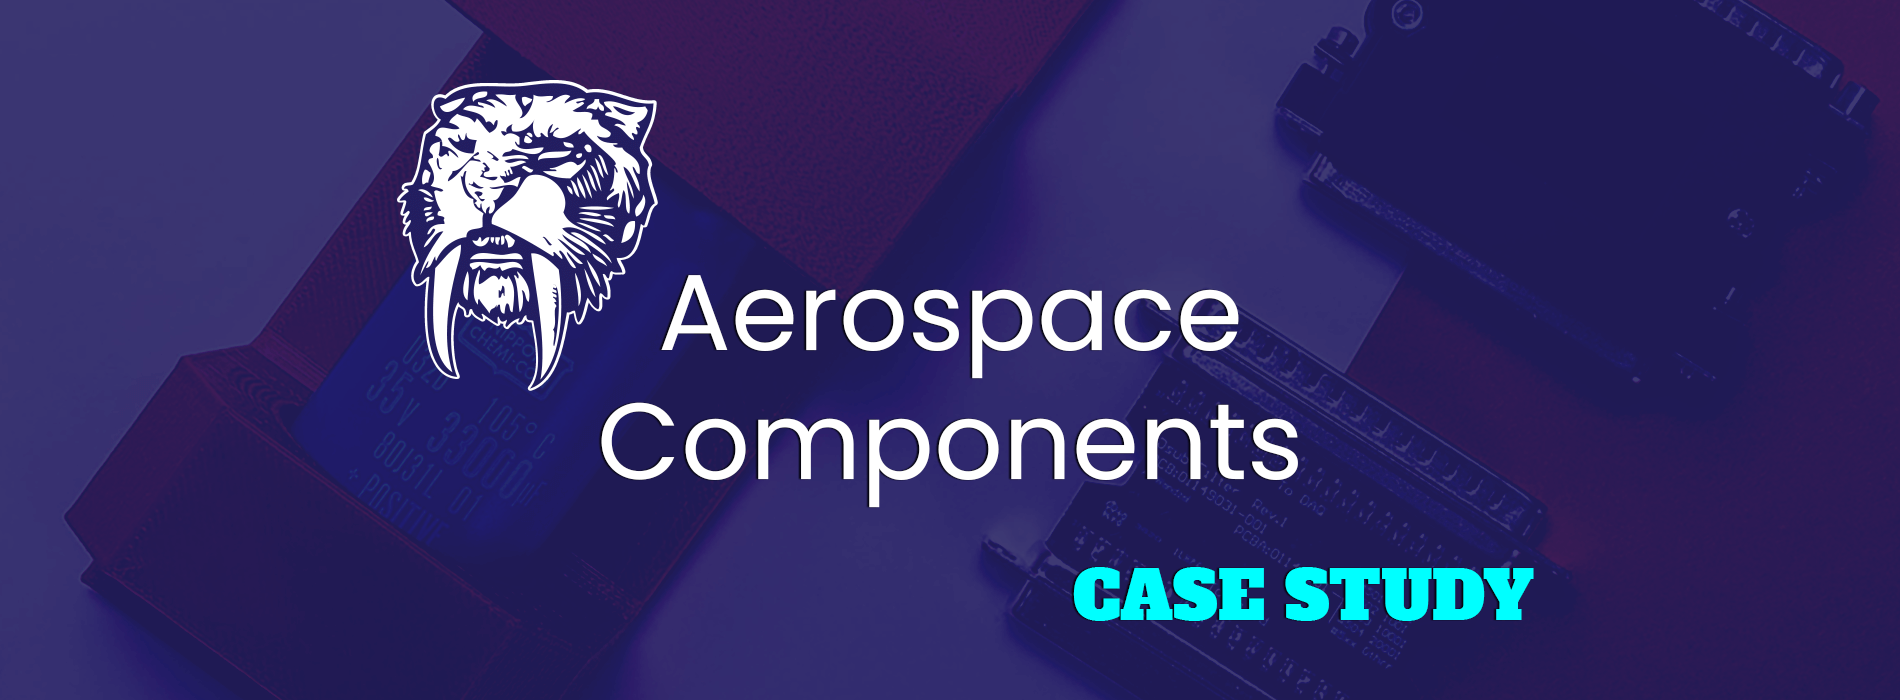 Aerospace Components Case Study